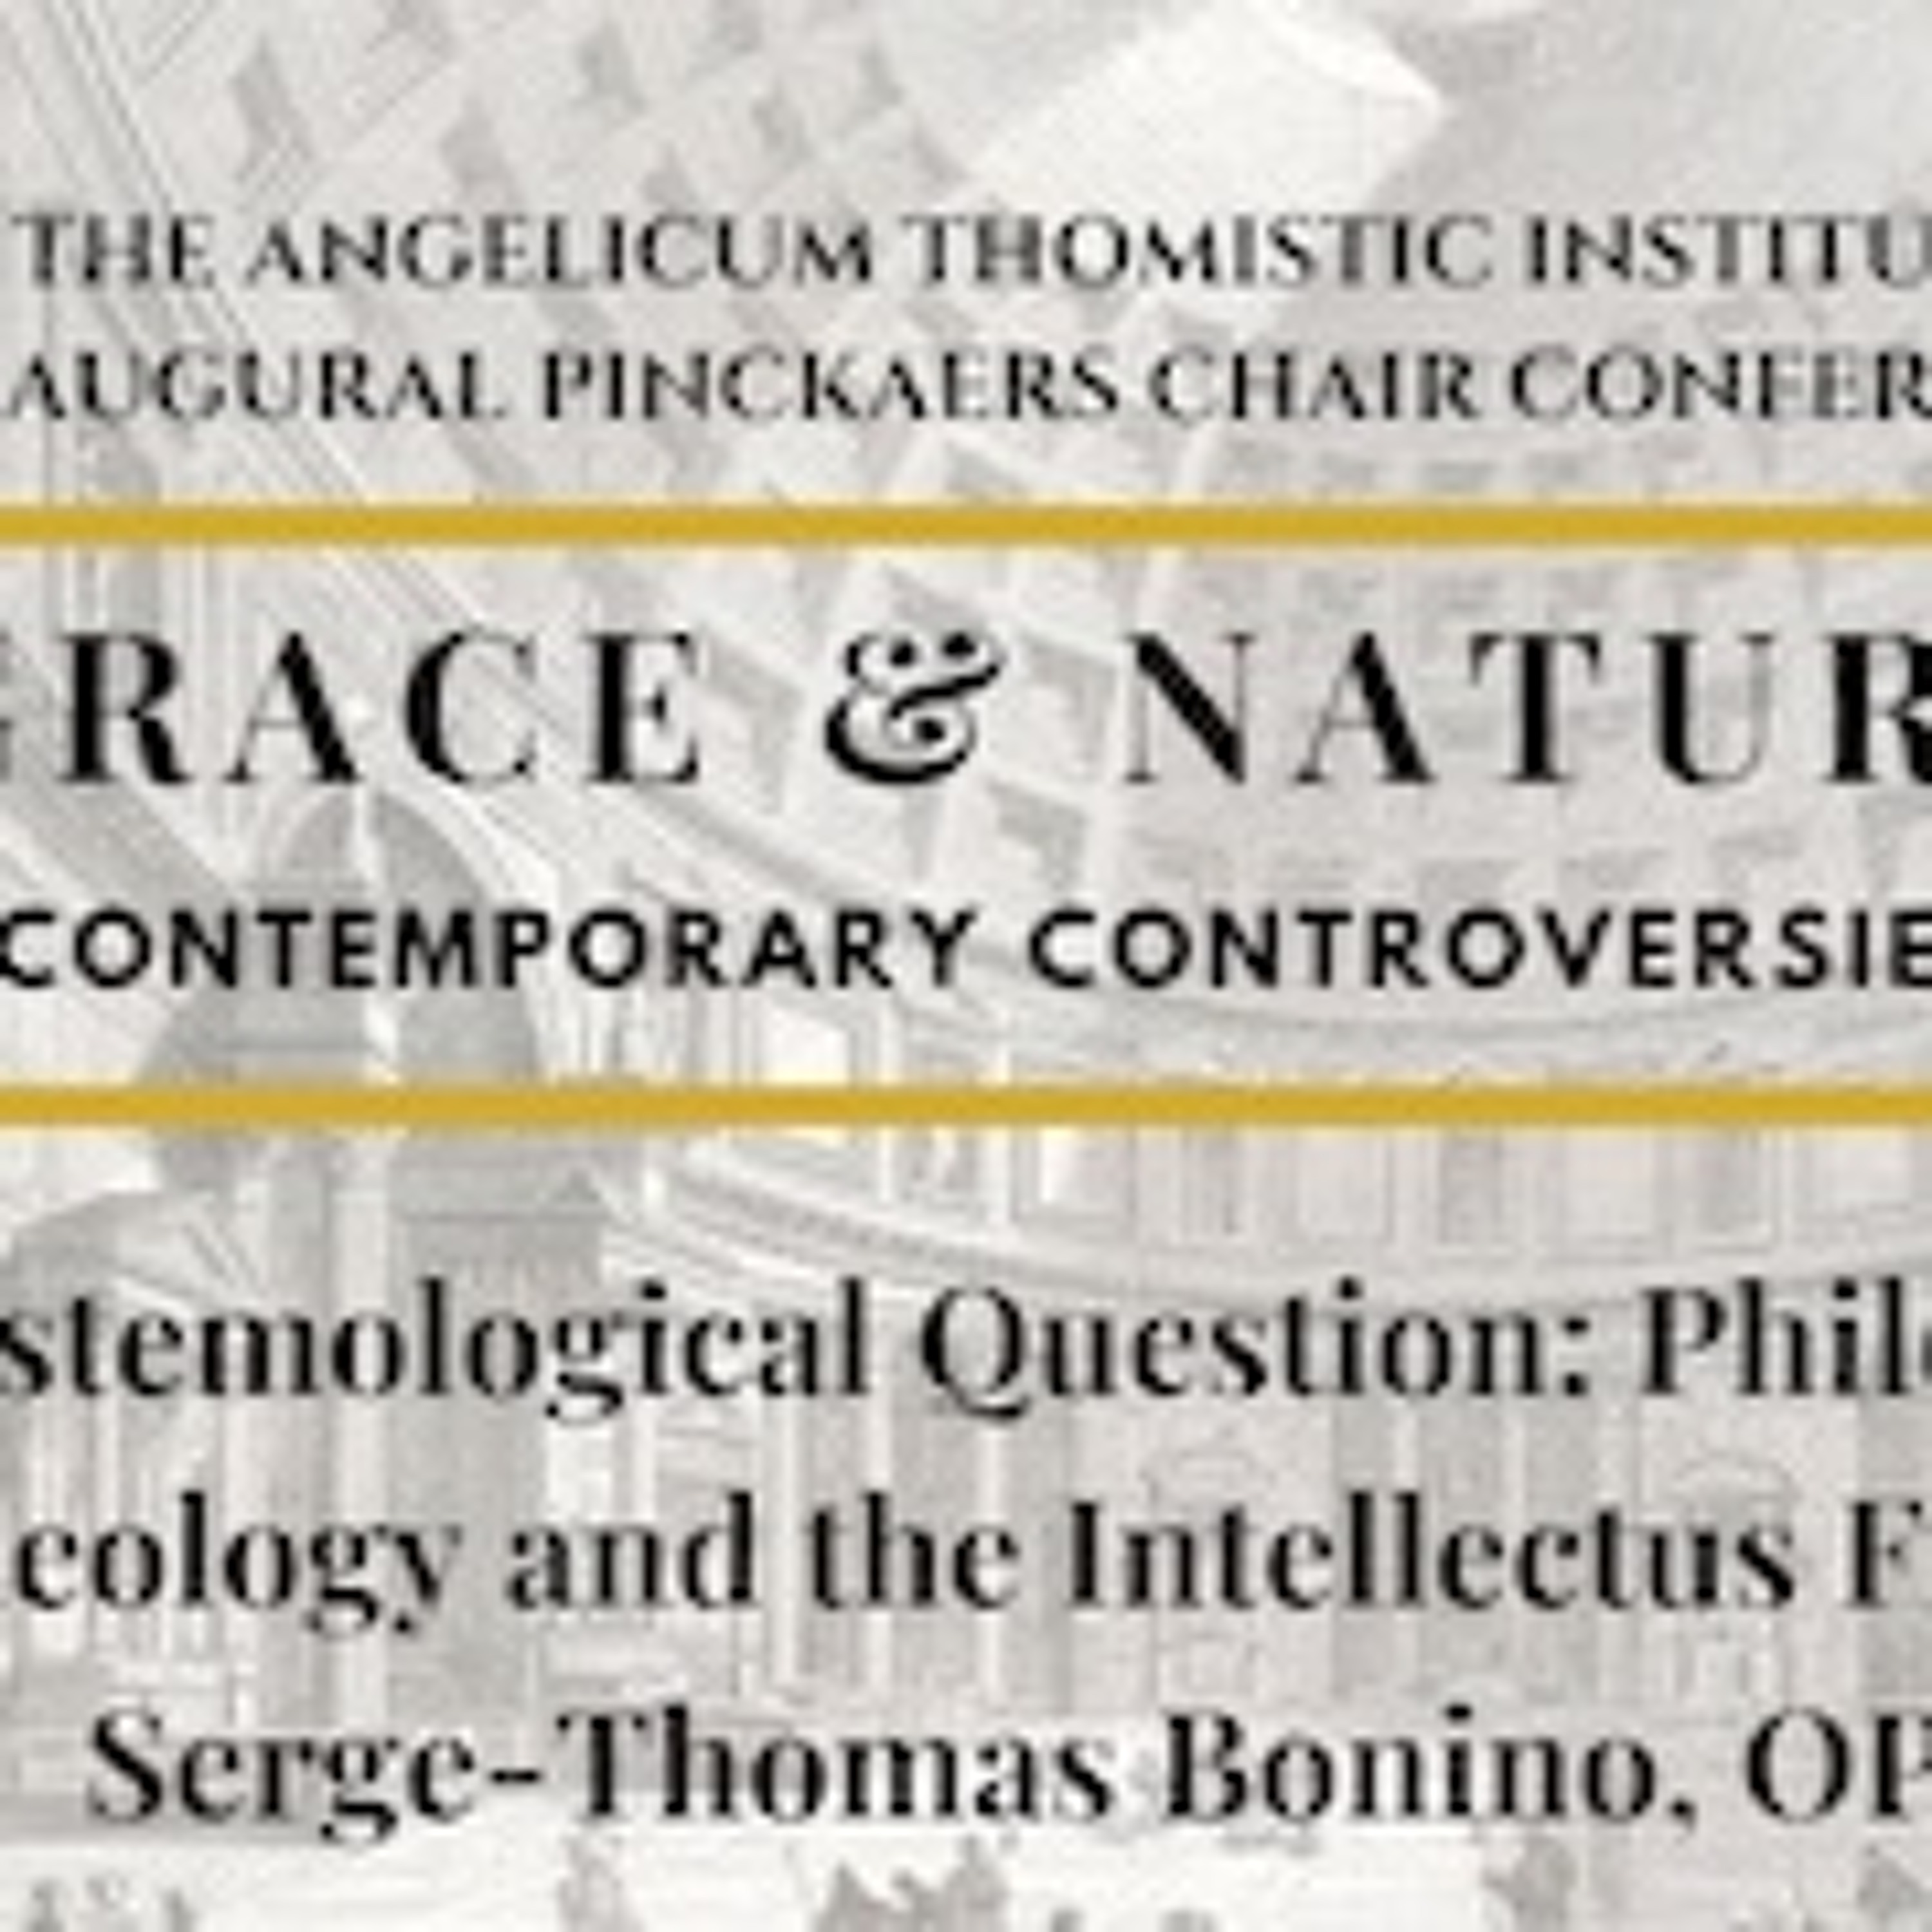 Philosophical Theology and the Intellectus Fidei | Serge-Thomas Bonino O.P